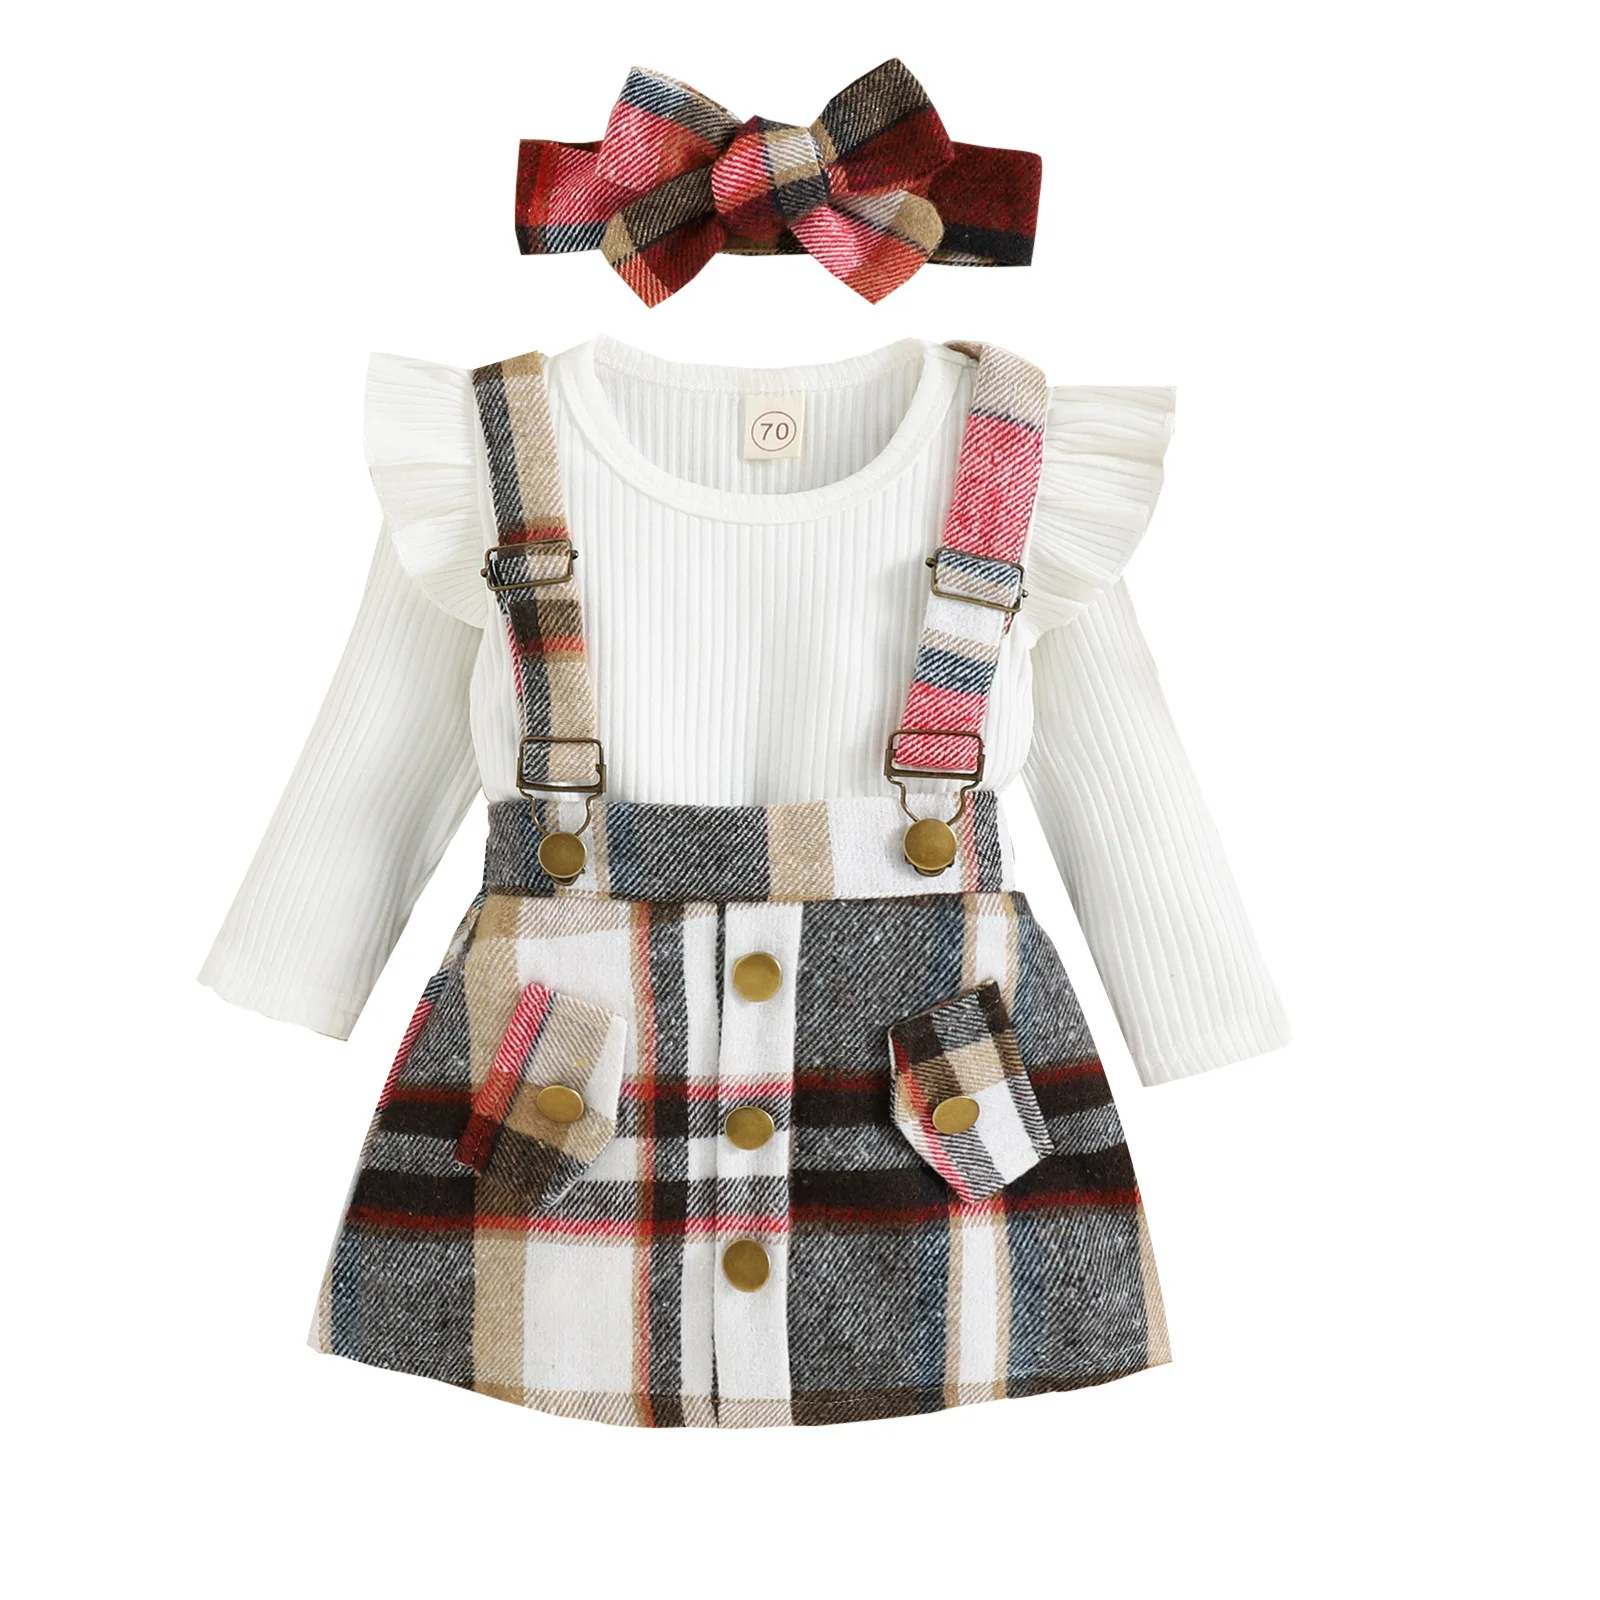 Newborn baby girls autumn clothes set kids ruffle long sleeve romper top+plaid suspender skirt+headband toddler outfits